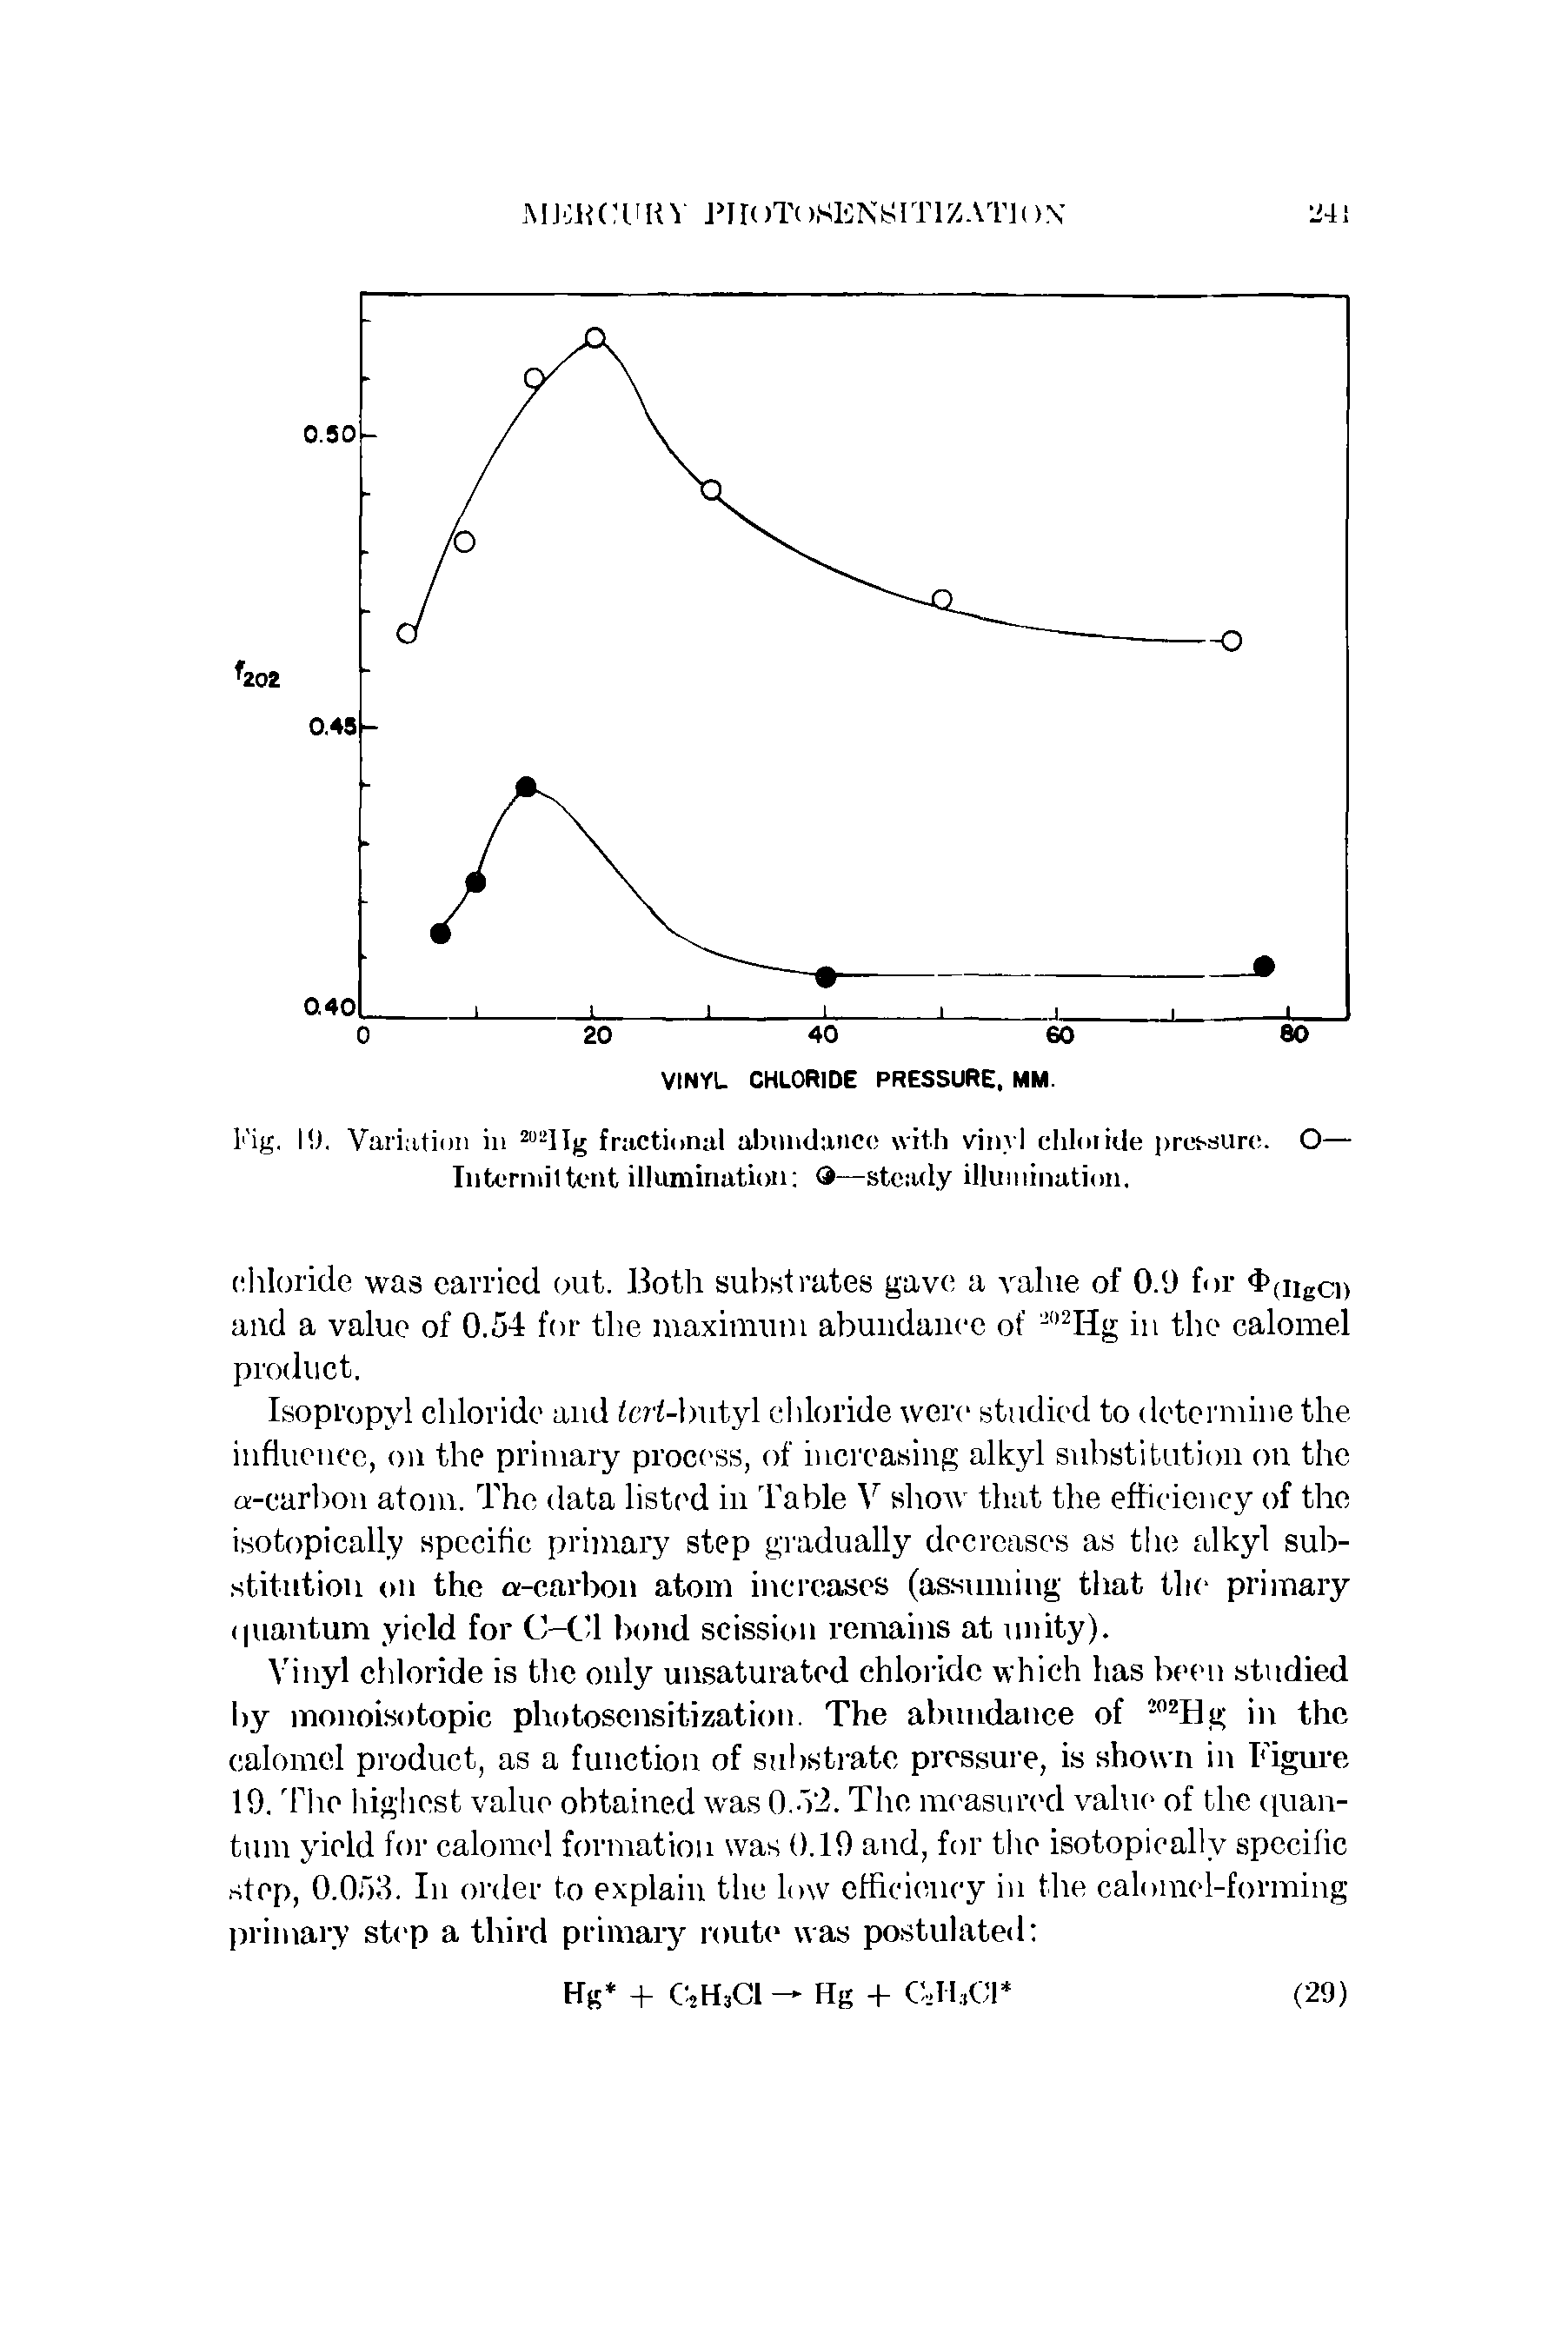 Fig. 111. Variation in 202IIg fractional abundance with vinyl cliloiide pressure. O— Intermittent illumination Q—steady illumination.